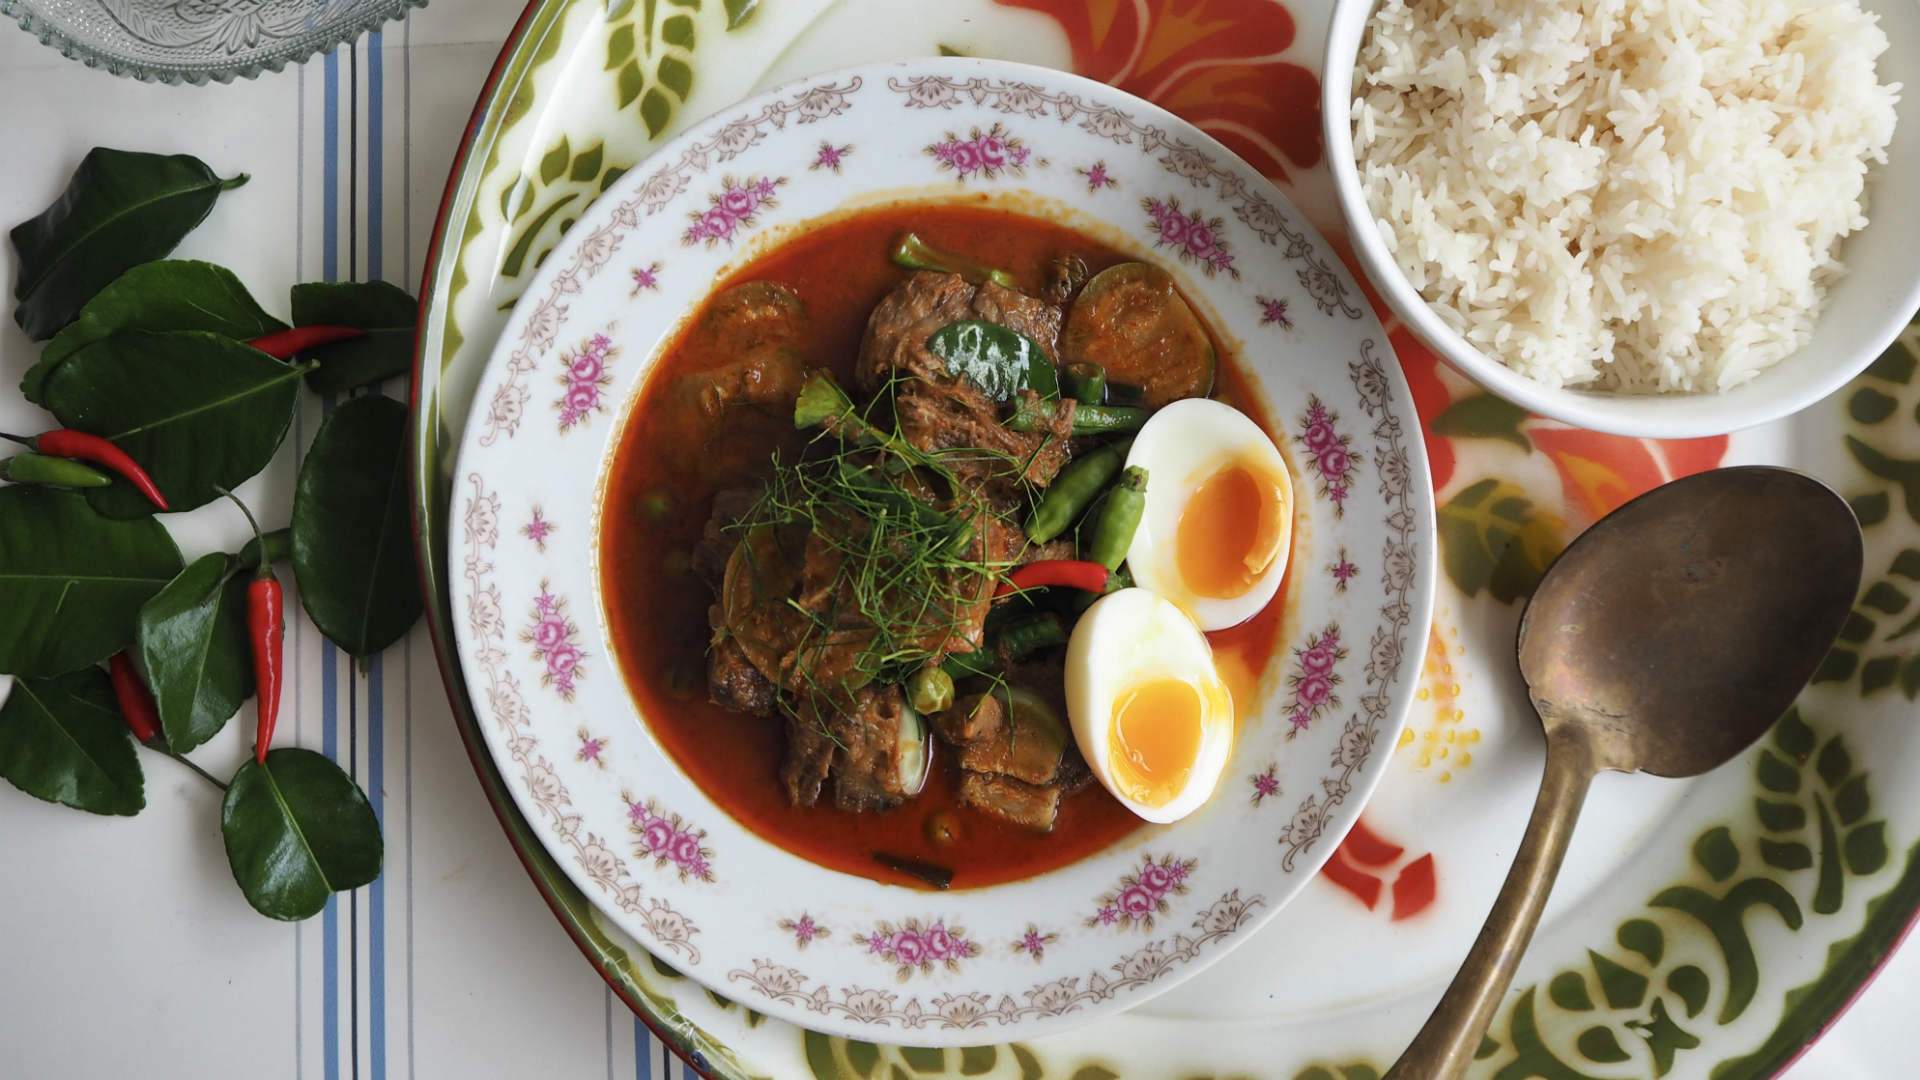 Meet Darlinghurst's Newest South East Asian Eatery, Joe's Table